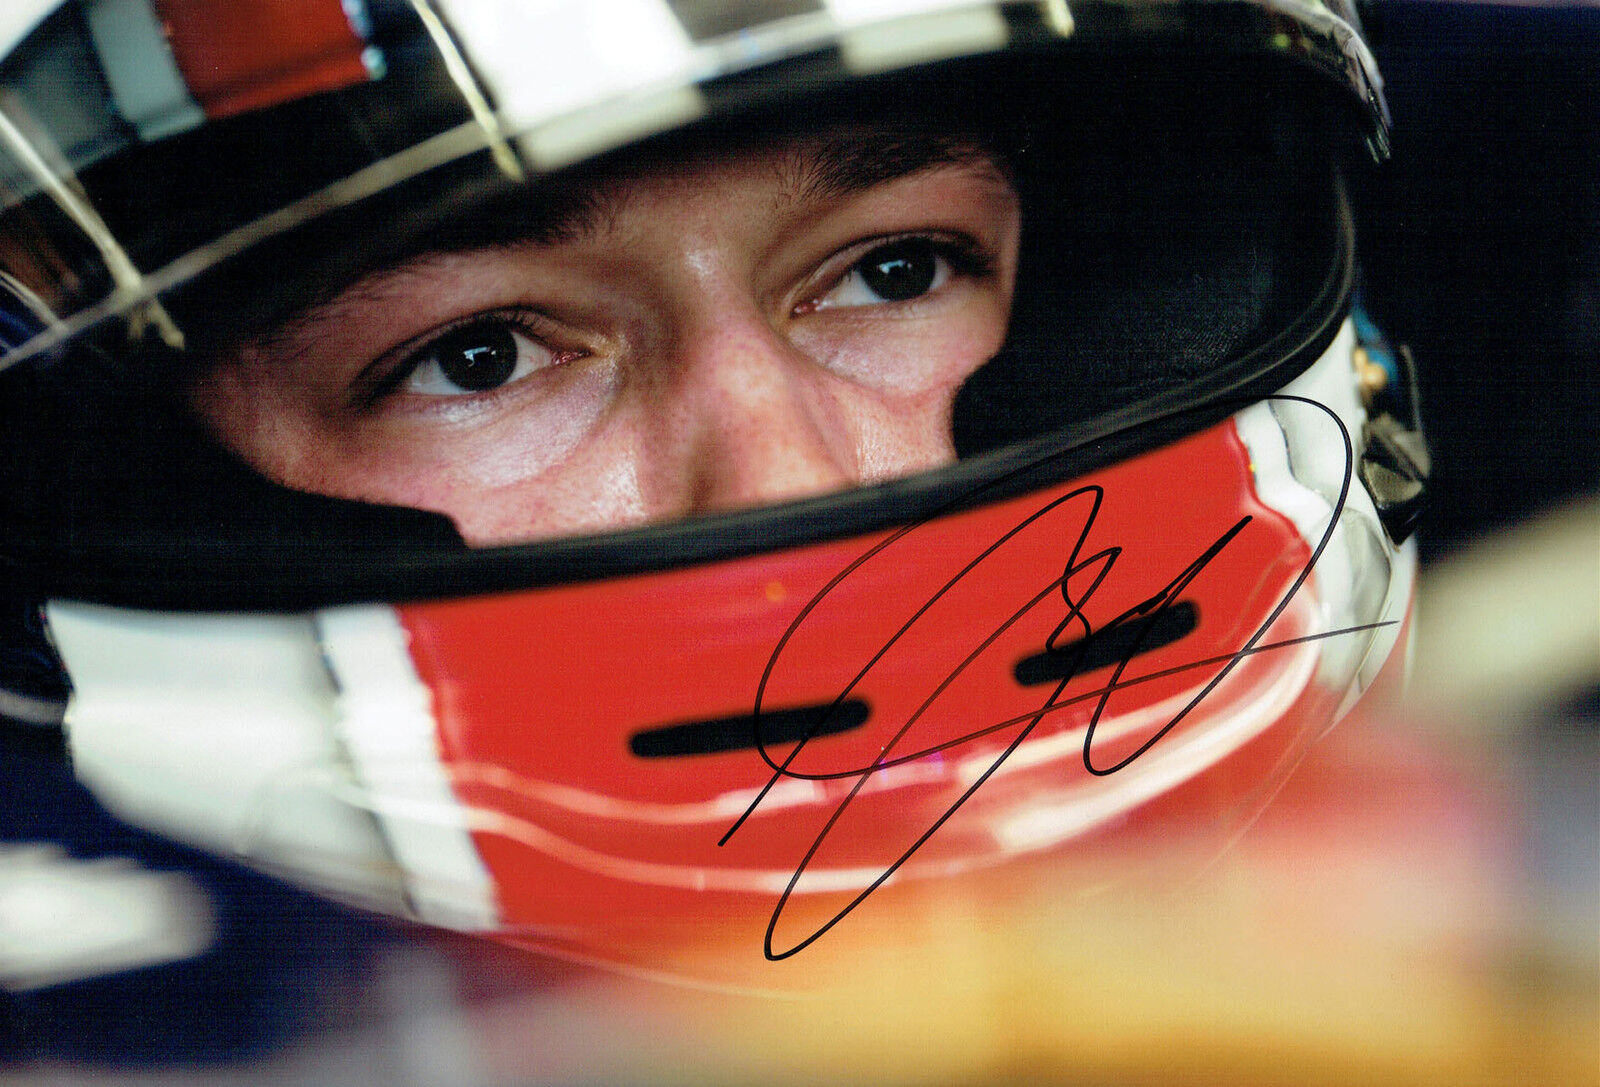 Daniil KVYAT SIGNED Autograph Red Bull F1 Driver 12x8 Portrait Photo Poster painting AFTAL COA